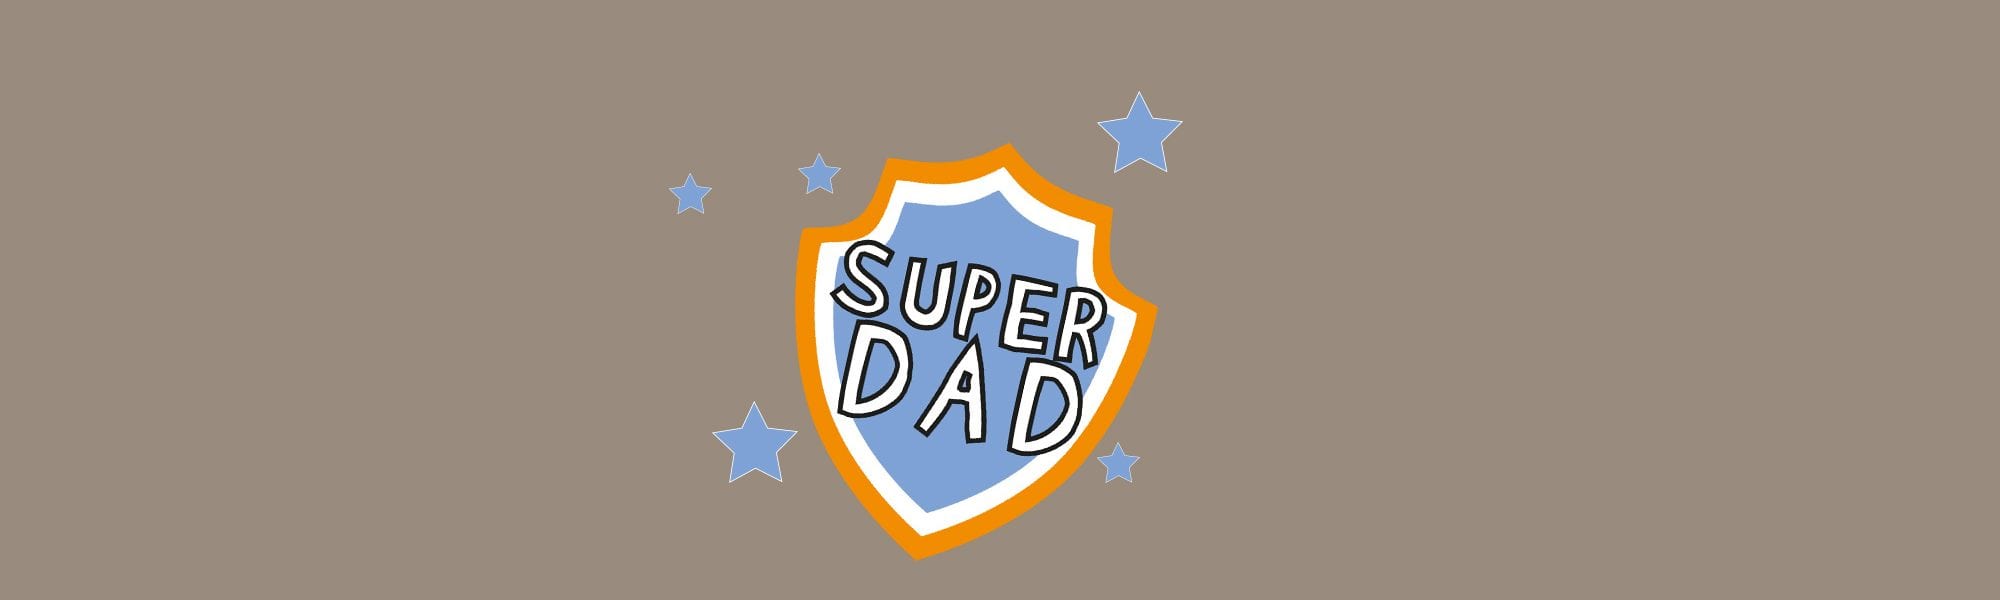 WCHF-Super-Dad-2019